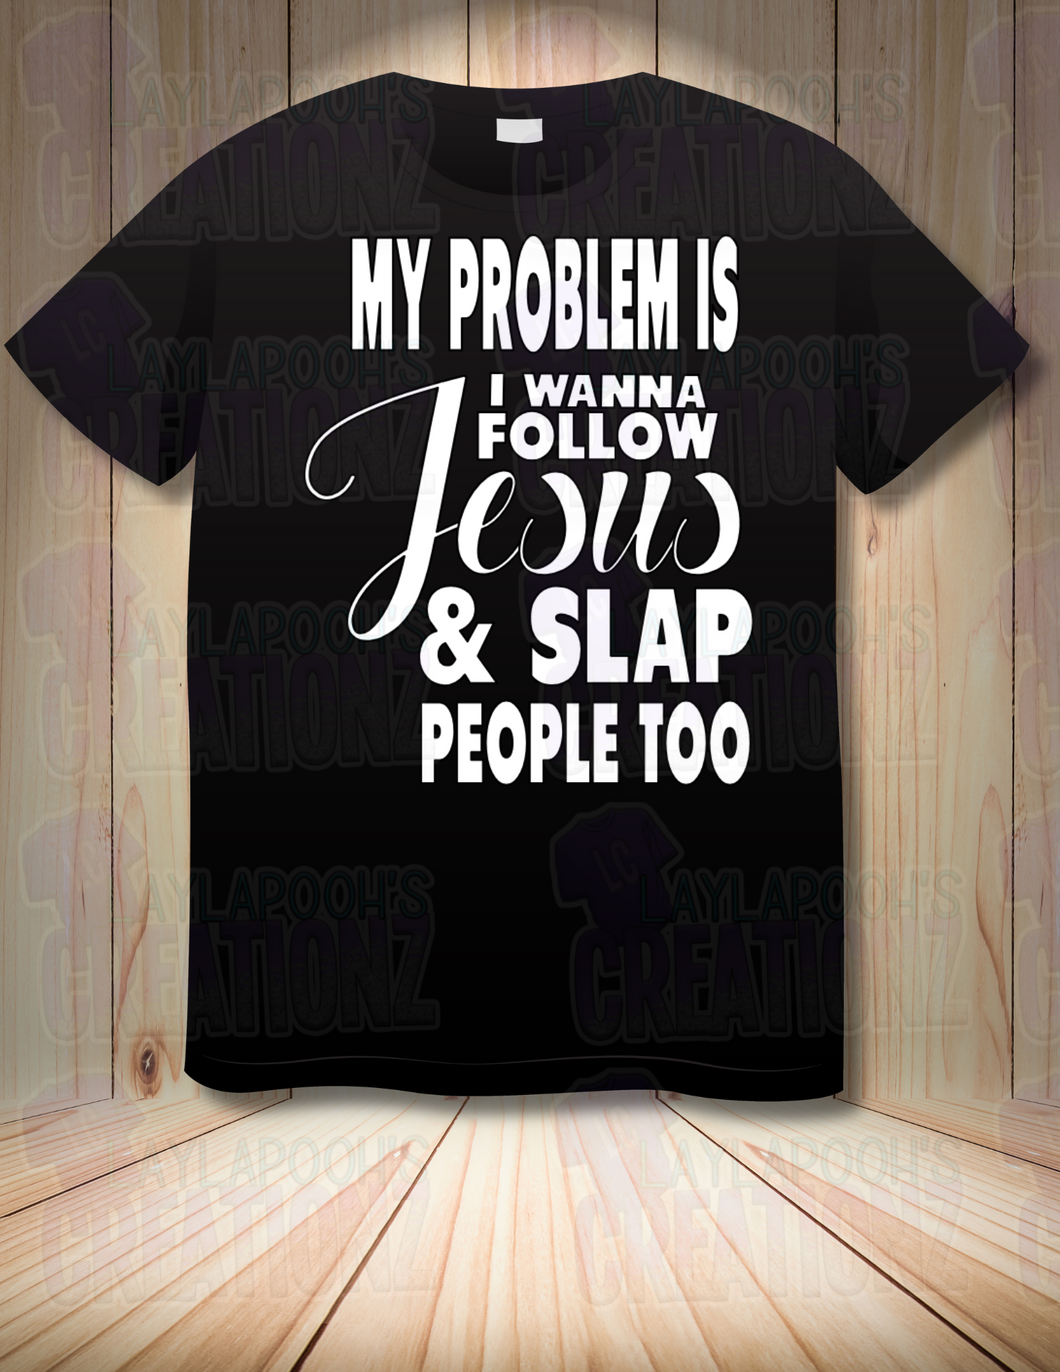 My problem is I wanna follow Jesus & slap people too